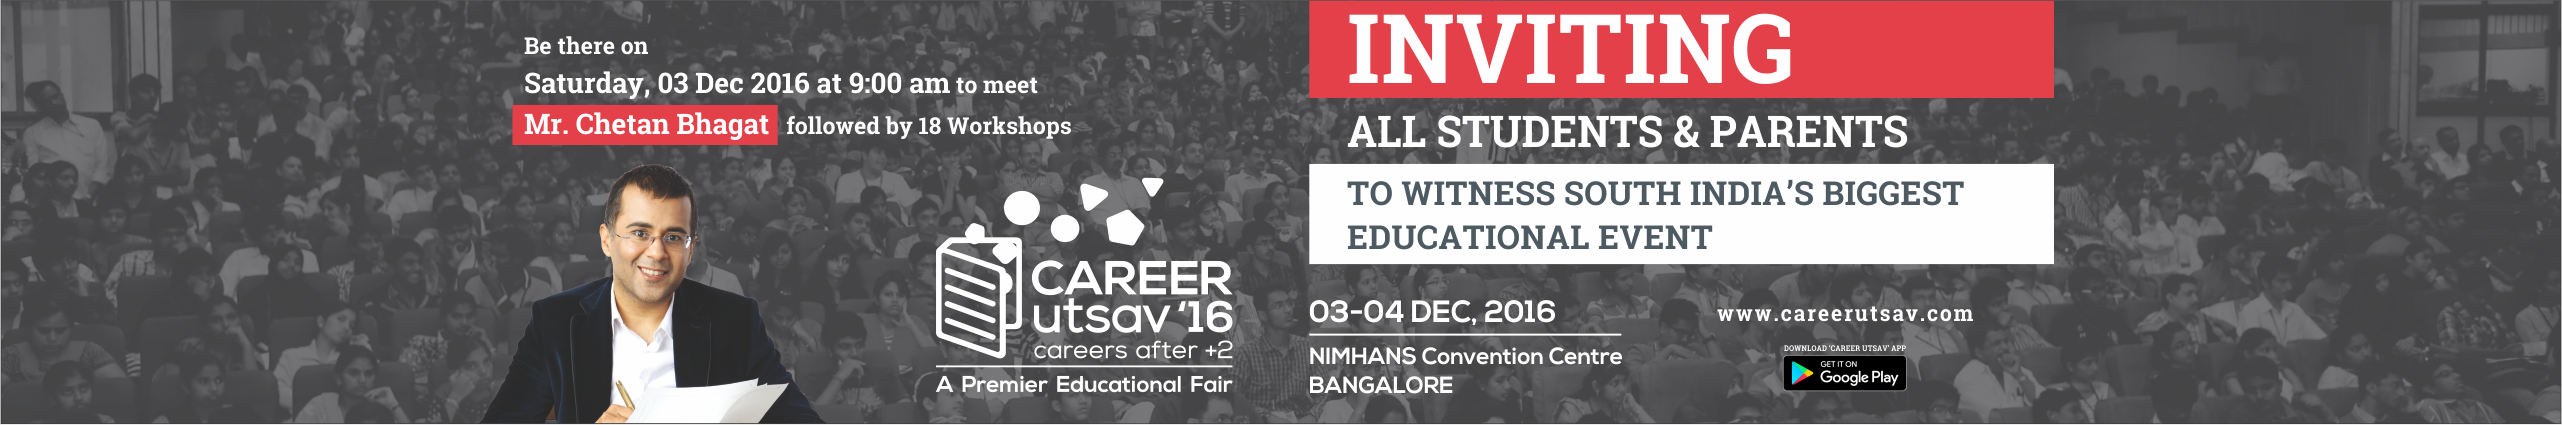 Career Utsav'16 (Careers After +2 A Premier Educational Fair), Bangalore, Karnataka, India